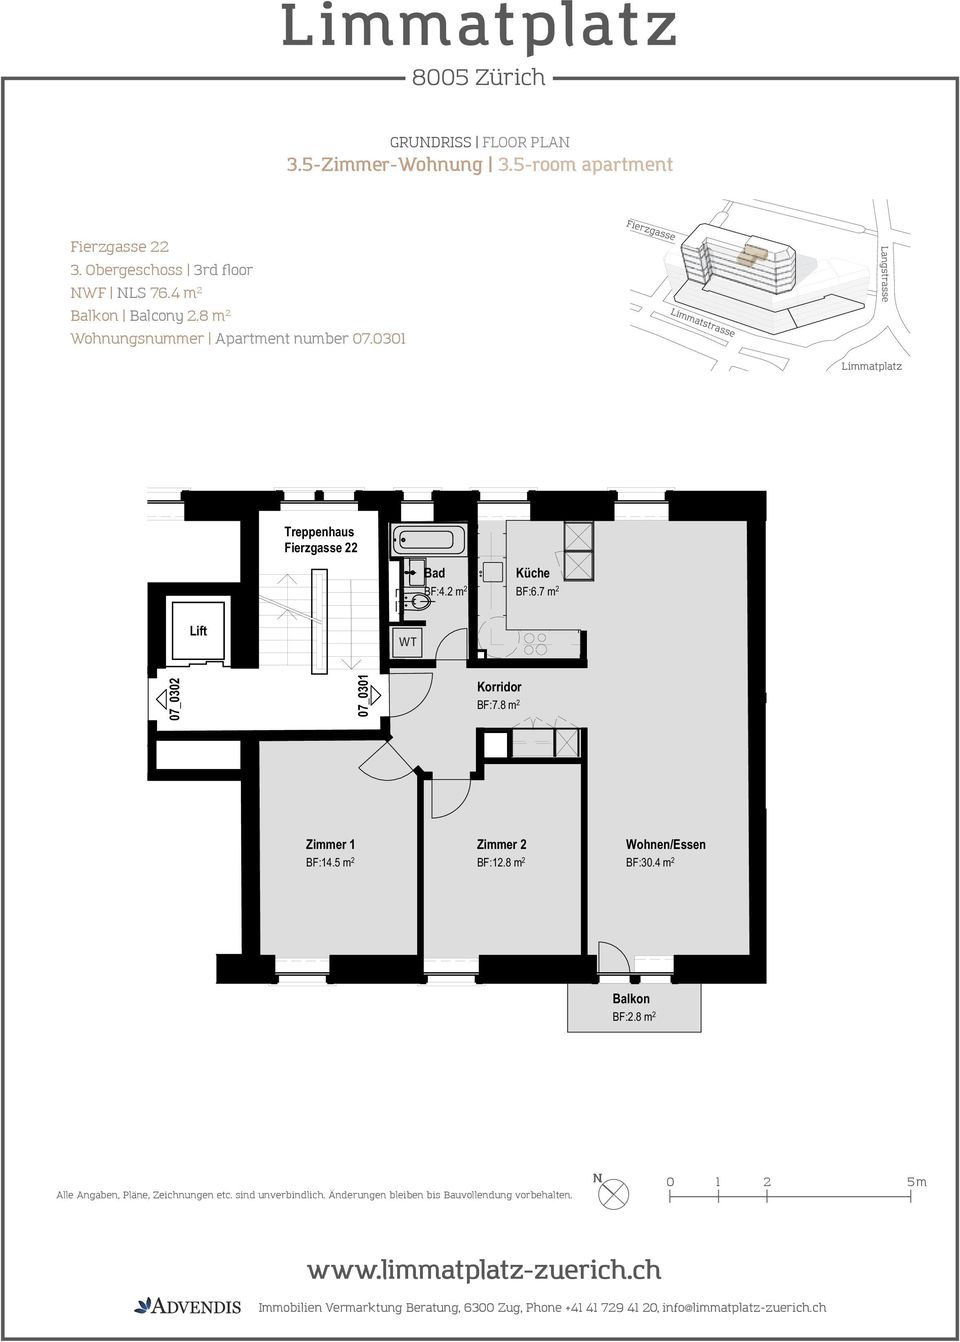 8 m 2 Wohnungsnummer Apartment number 07.0301 BF:4.2 m 2 BF:6.